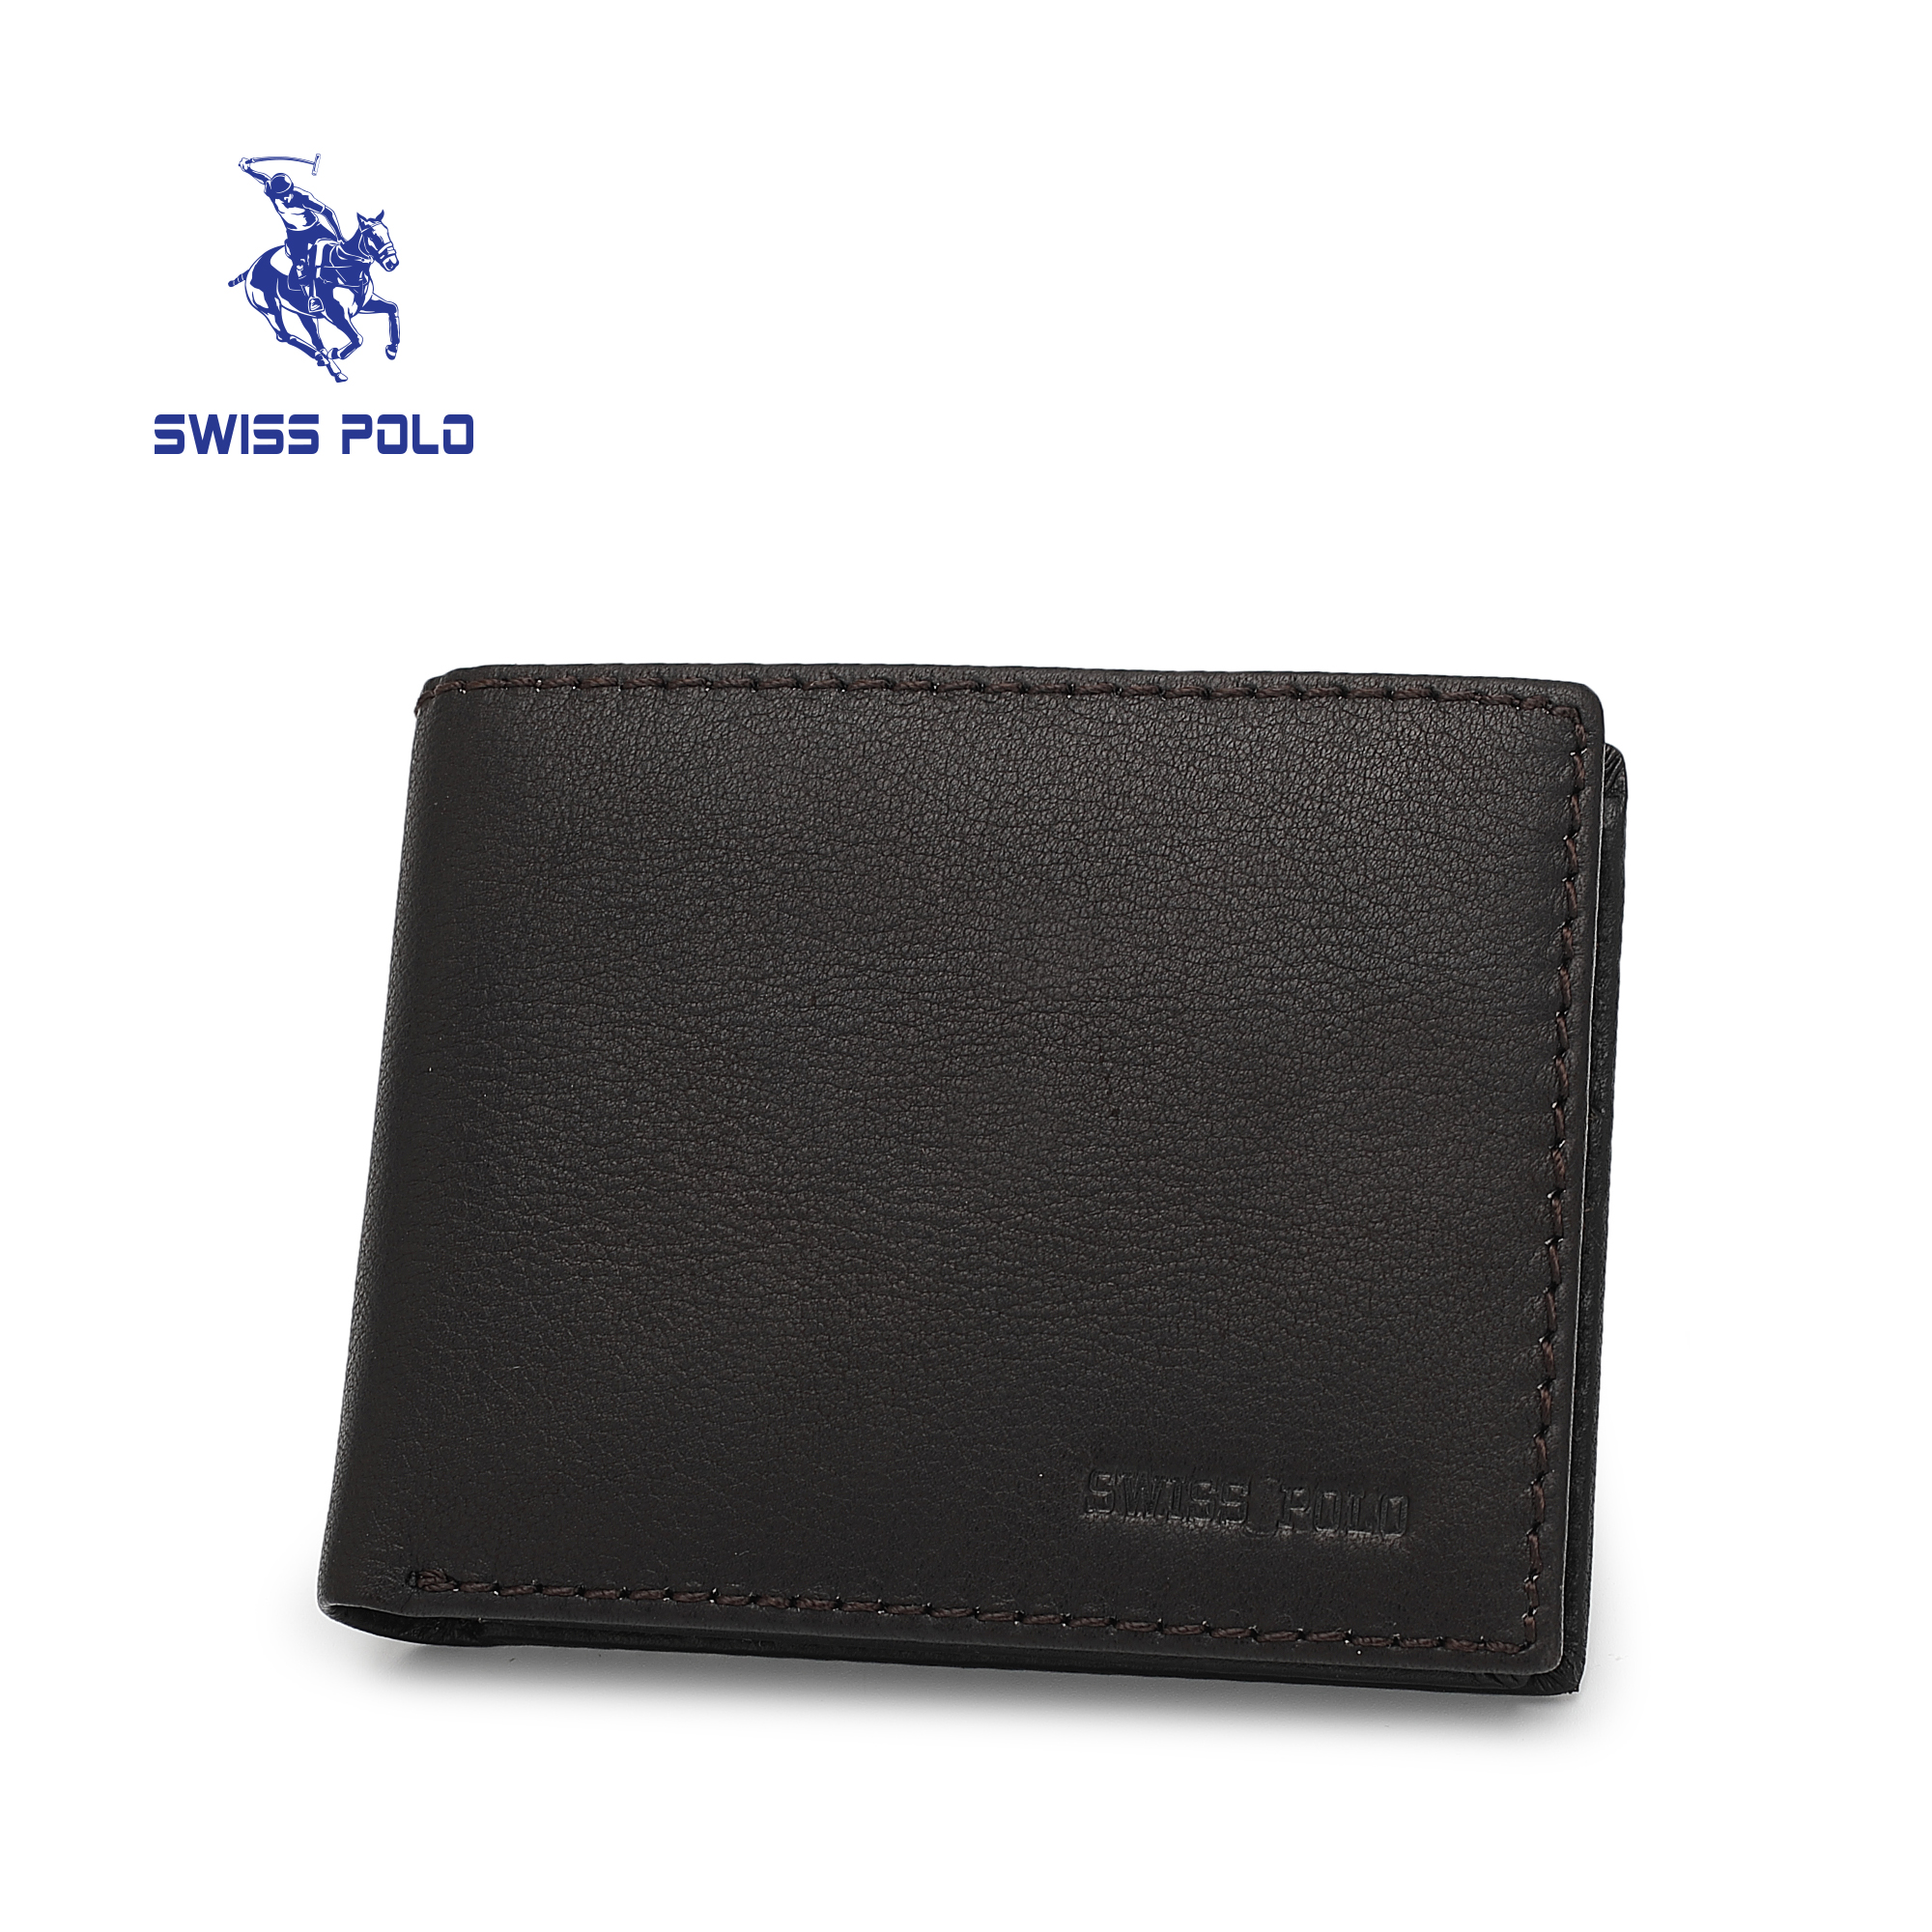 SWISS POLO Genuine Leather RFID Short Wallet SW 177-3 DARK COFFEE